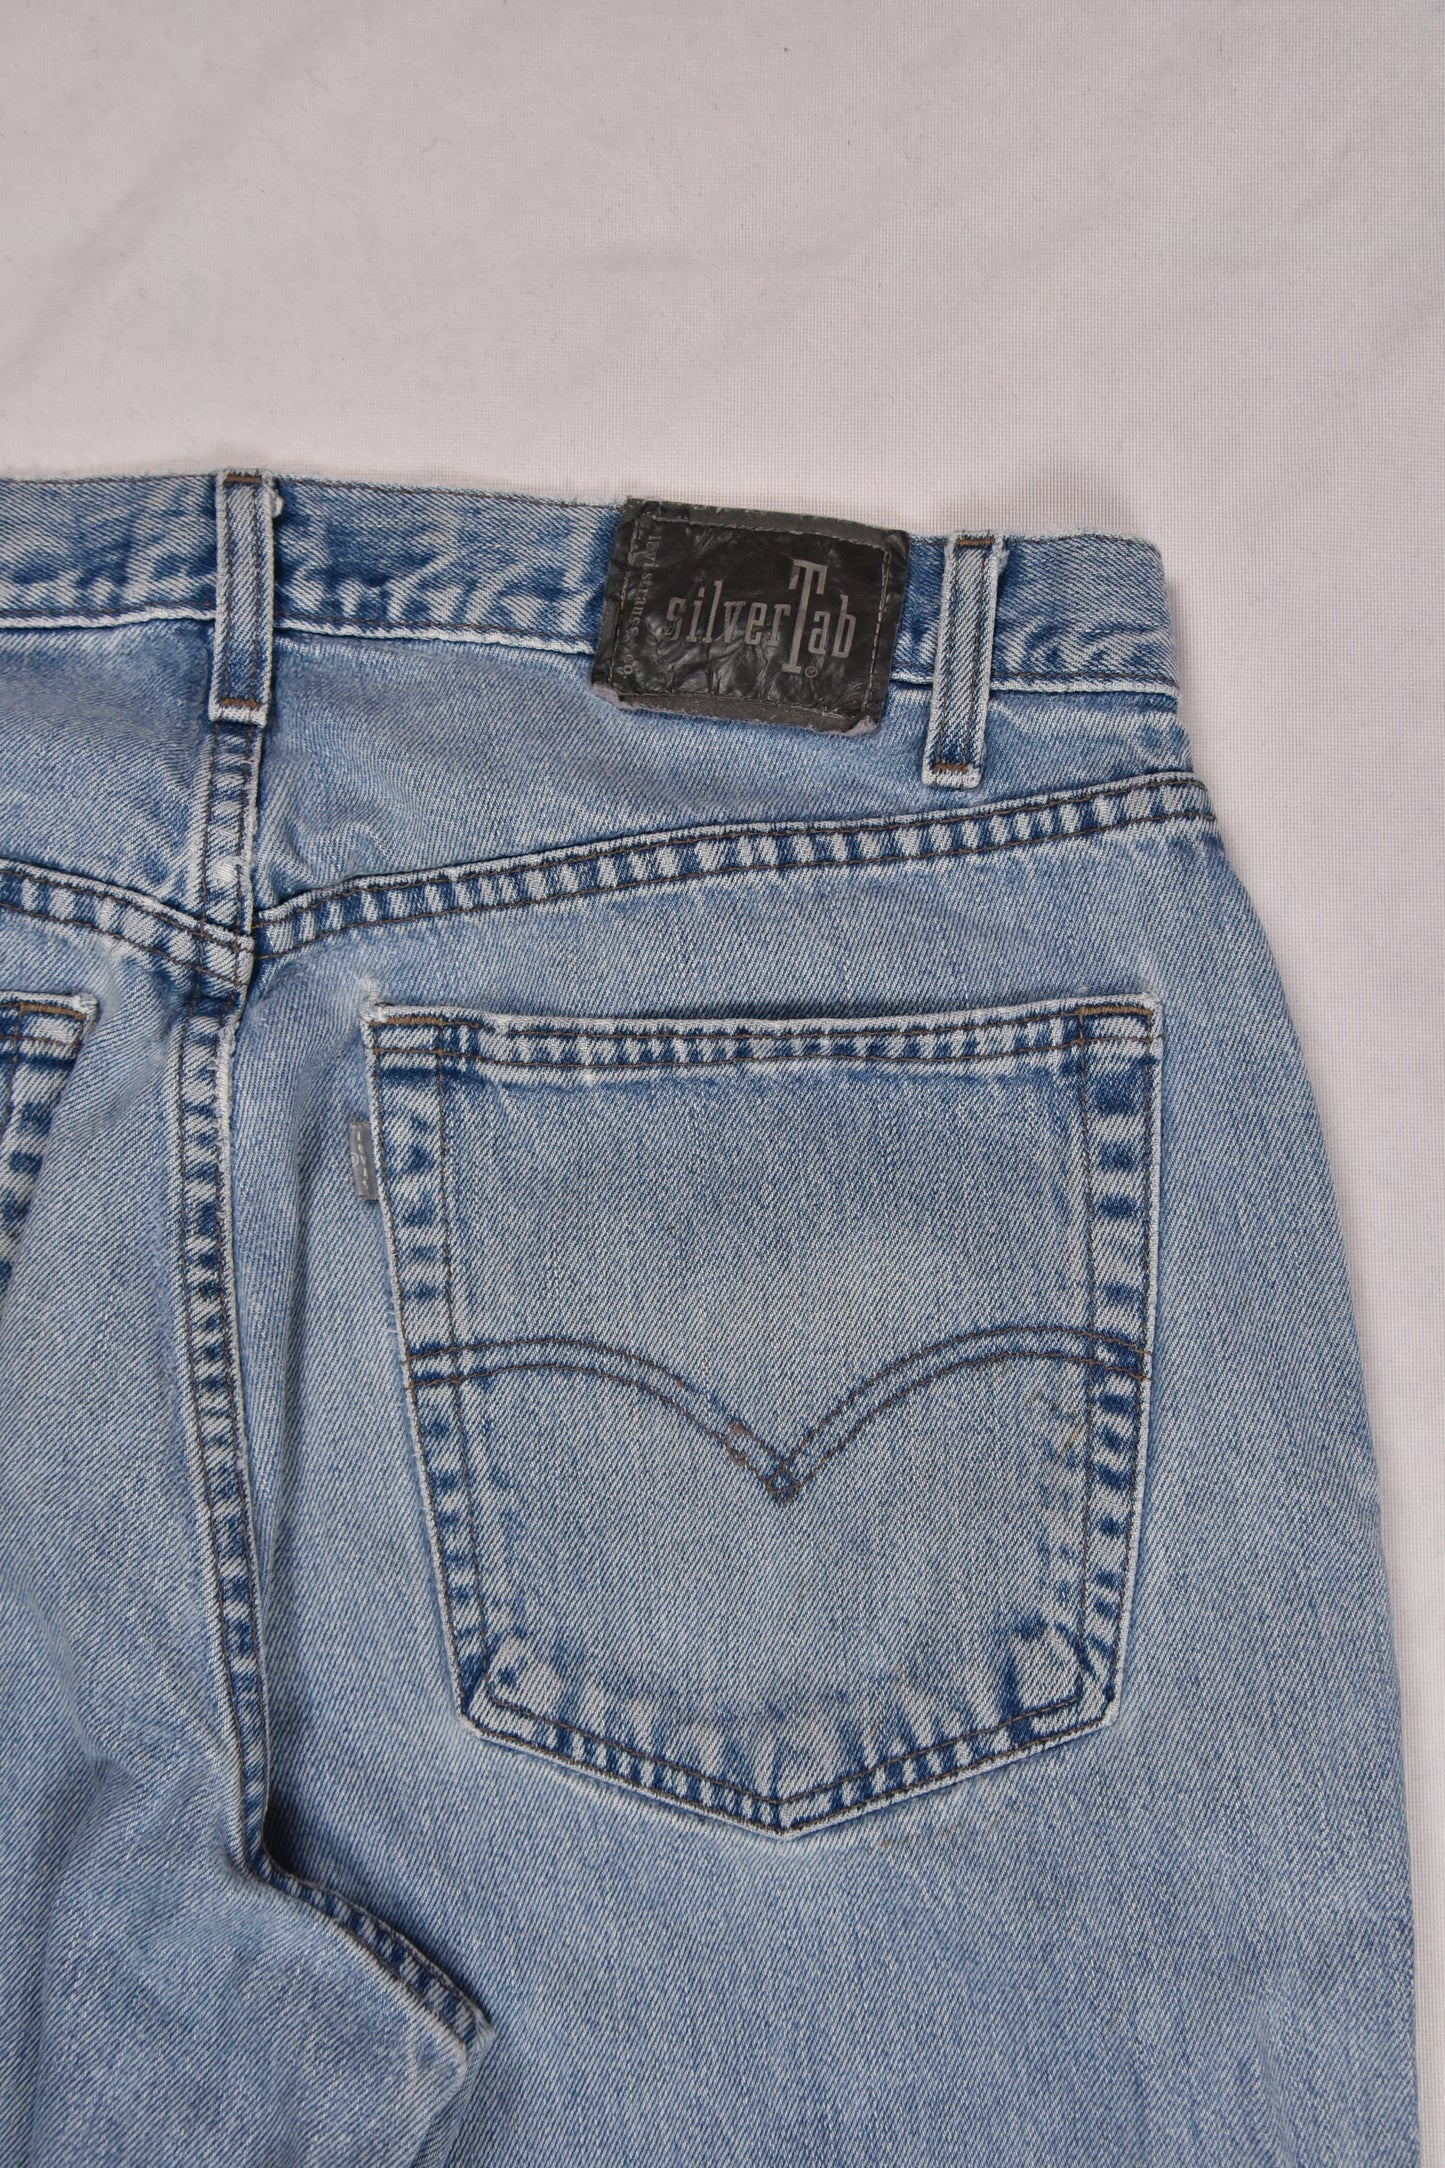 Levi's Silver Tab Jeans Vintage / 36x32